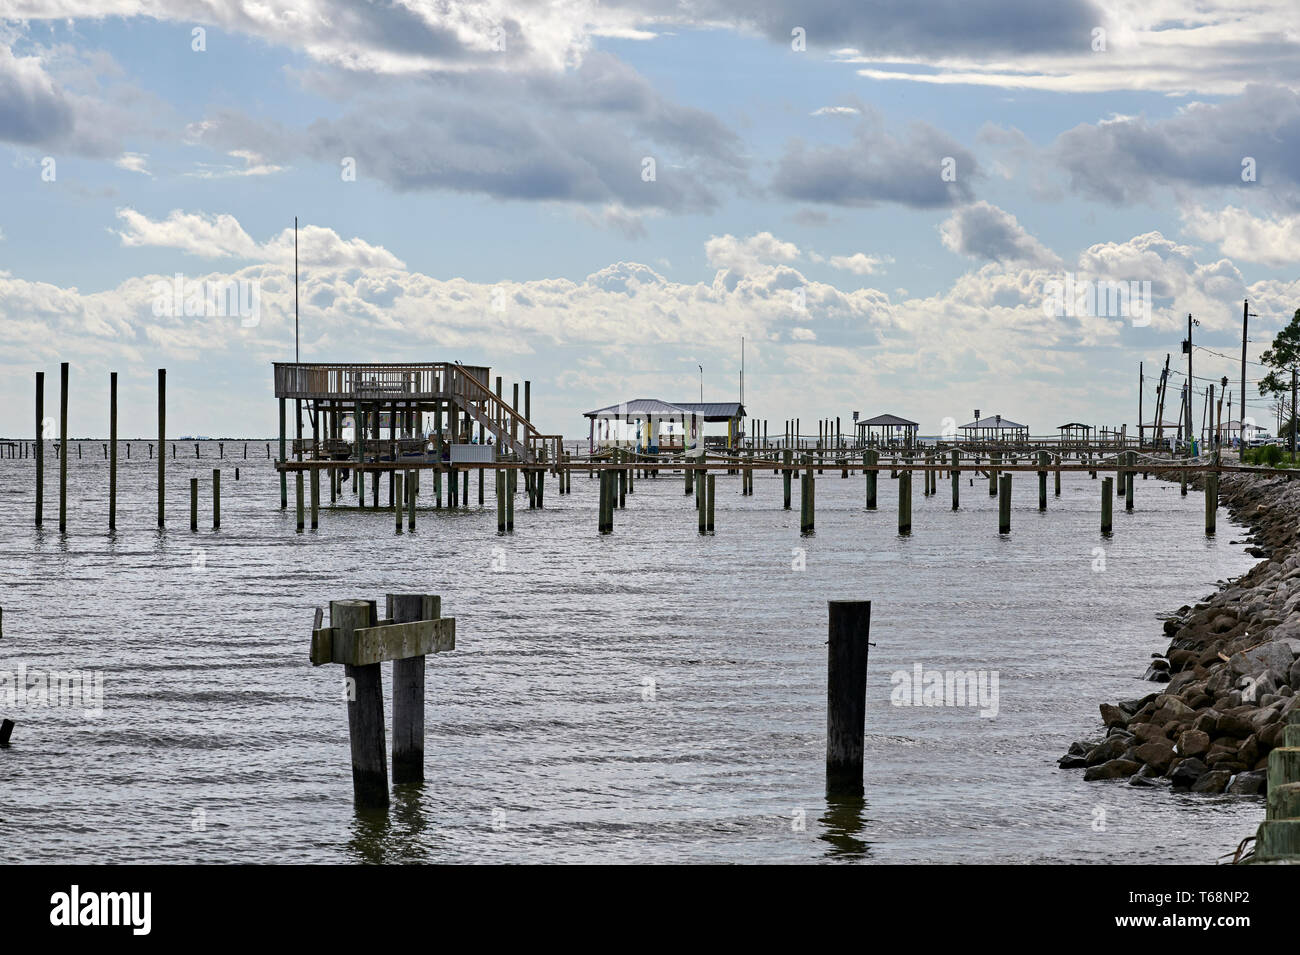 Holz- docks, piers und Pilings entlang der Küste an der Mobile Bay an der Golf Küste, in der Nähe der Coden Alabama, USA. Stockfoto